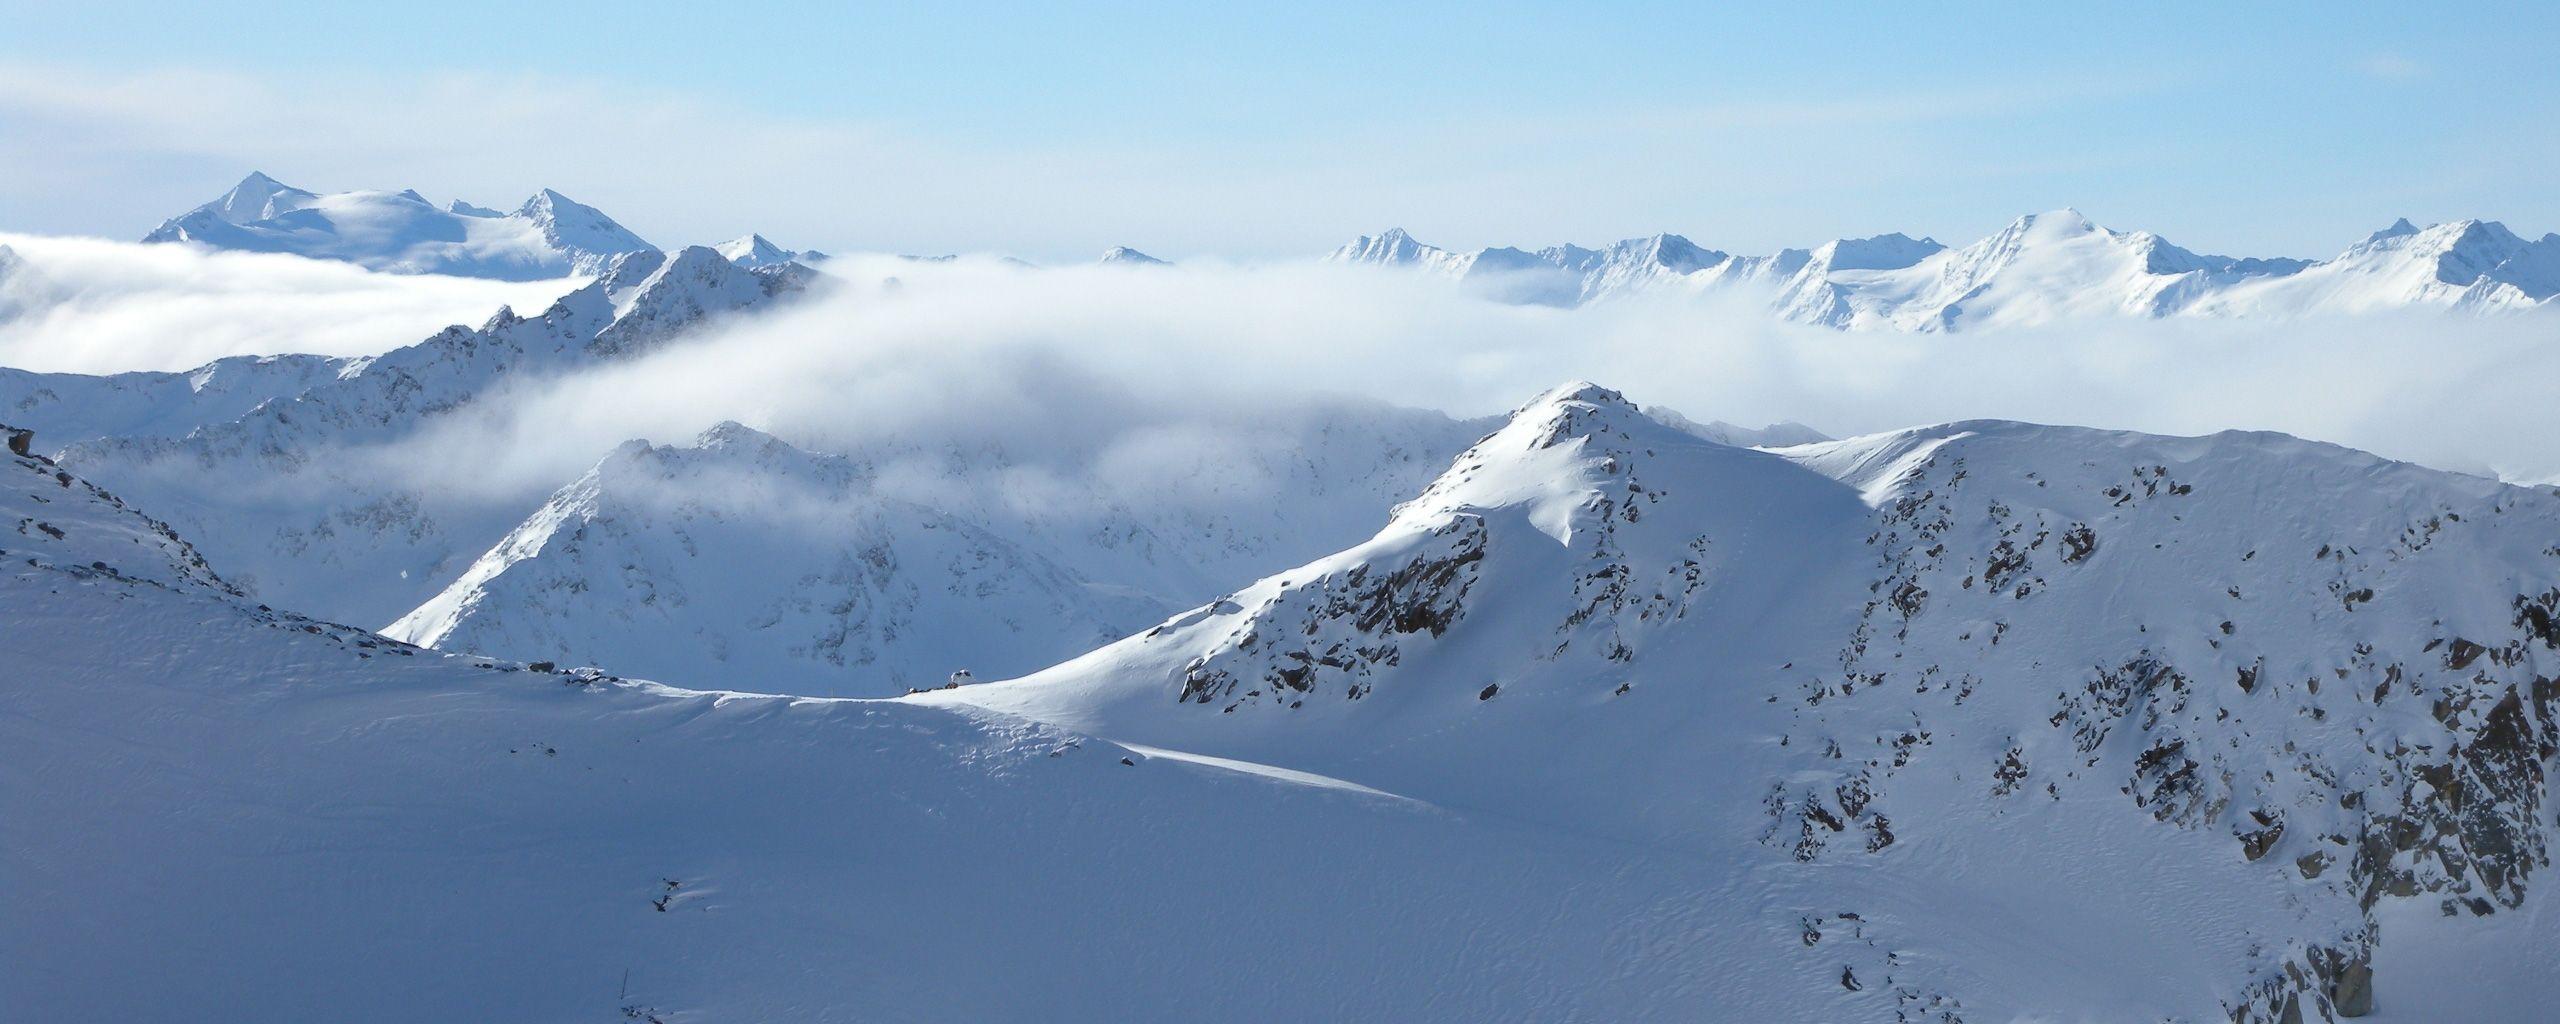 Alps In Winter Wallpaper Wide or HD